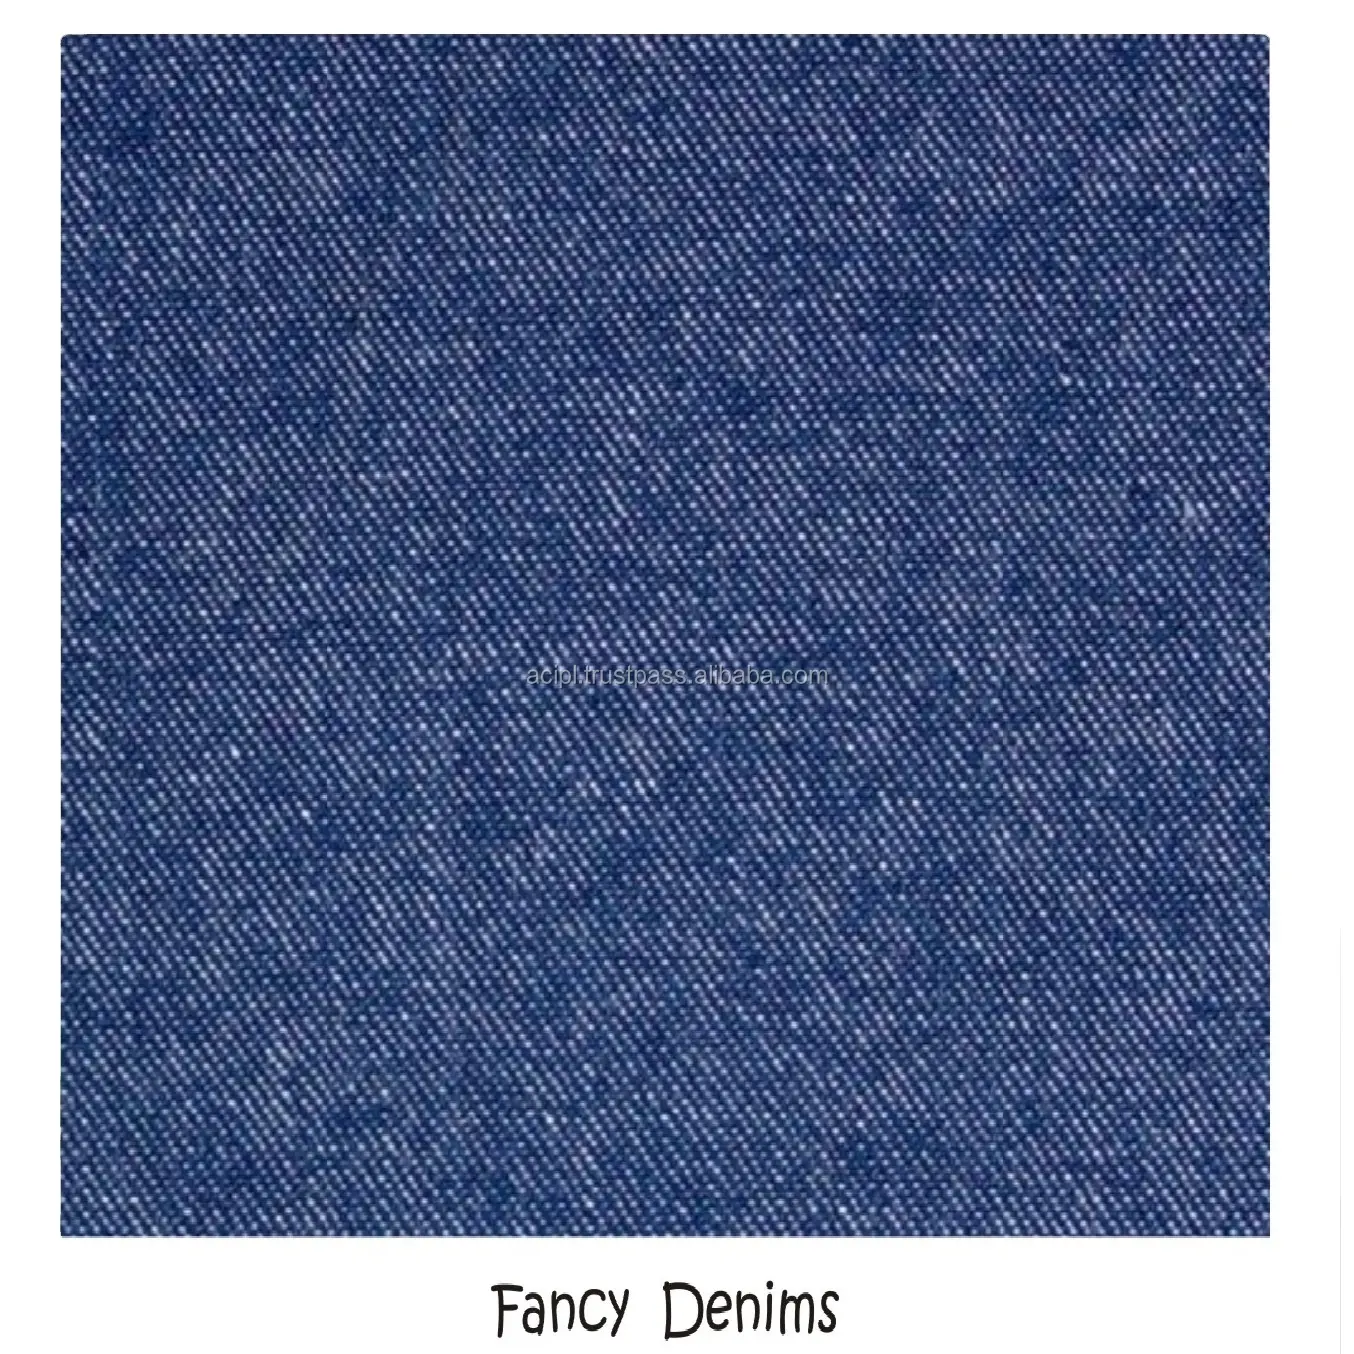 100% pamuklu kot kumaş indigo mavi renk 11oz 62 genişlik örgü 3/1 RHT rulo ambalaj tipi kumaş satılık hindistan